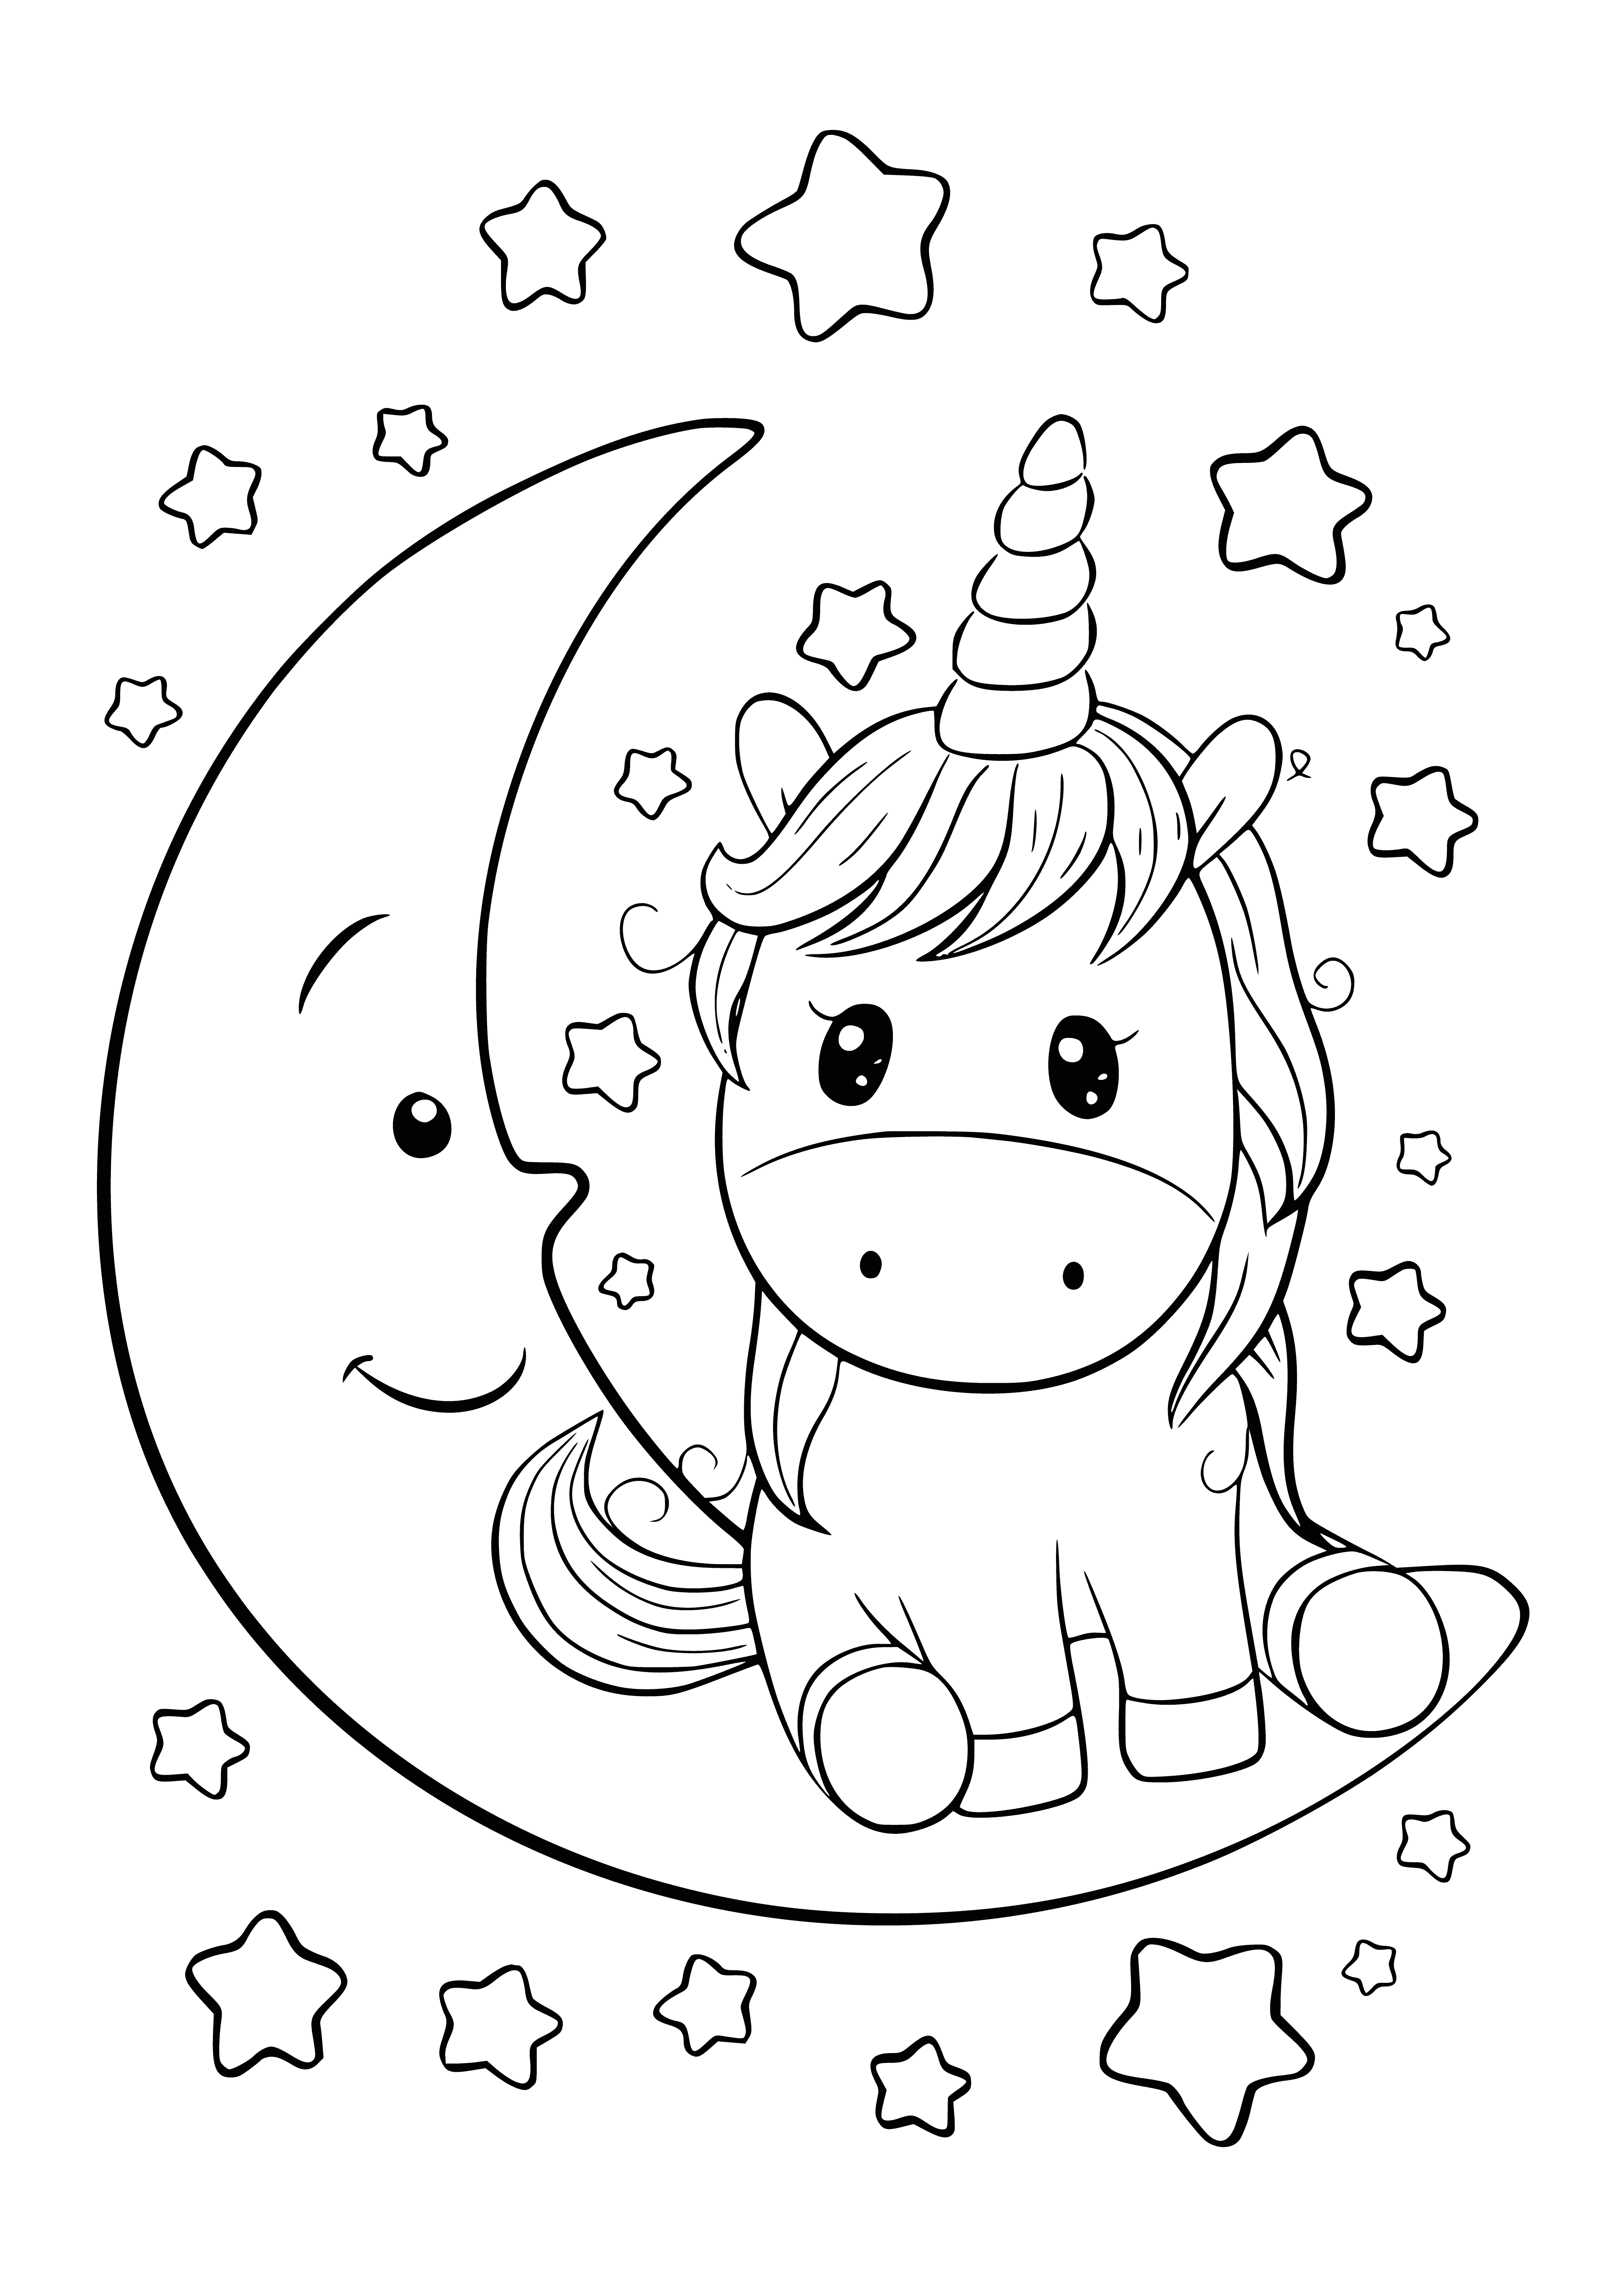 Cute unicorn coloring page